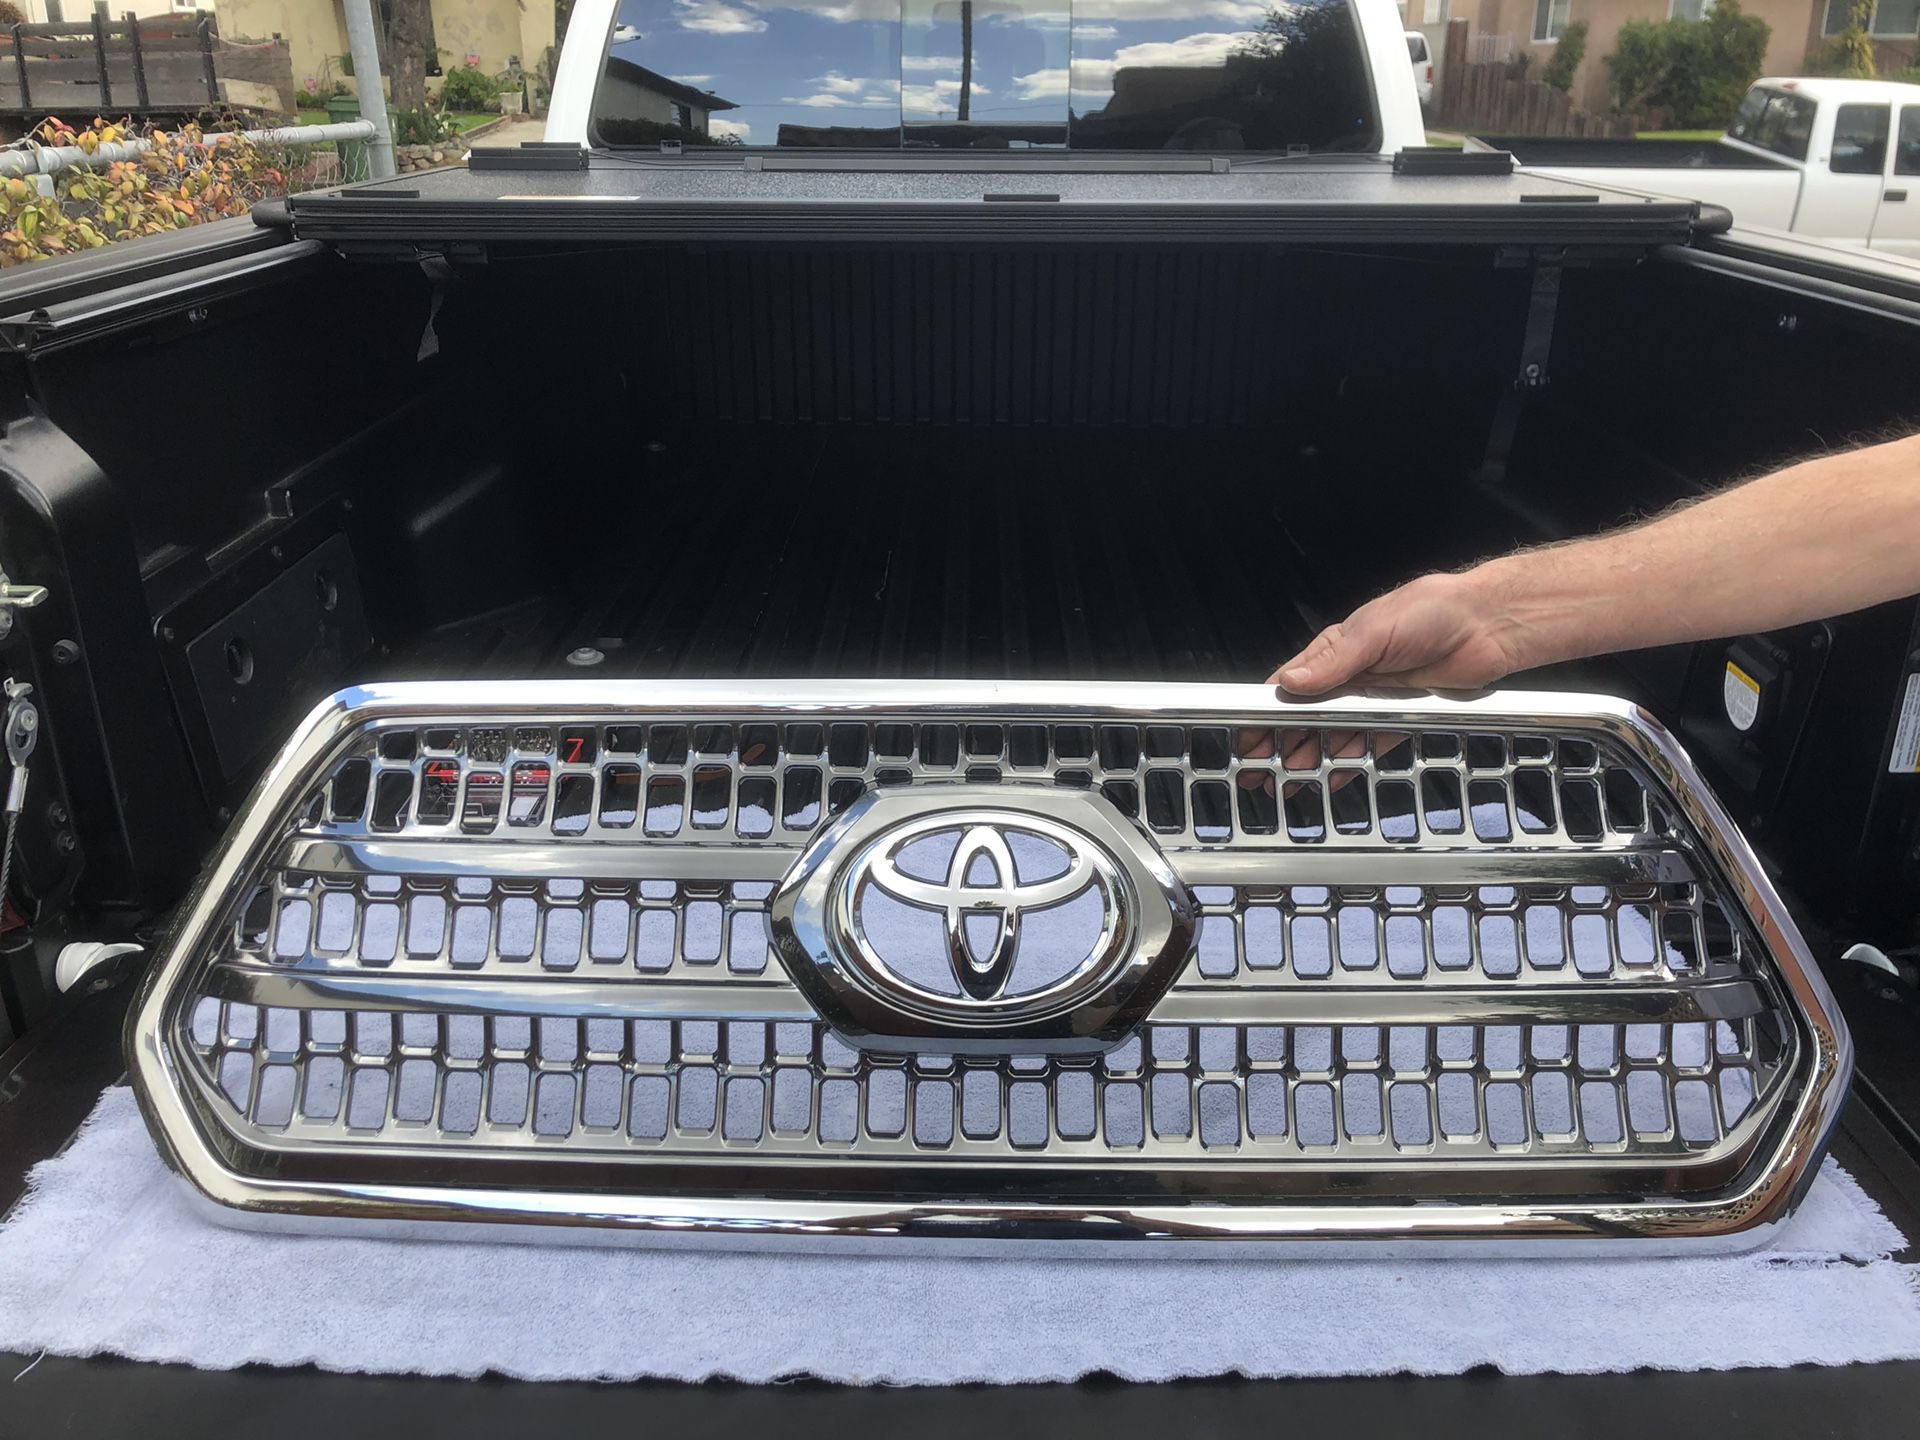 *Like New* Toyota Tacoma 2017 OEM grille